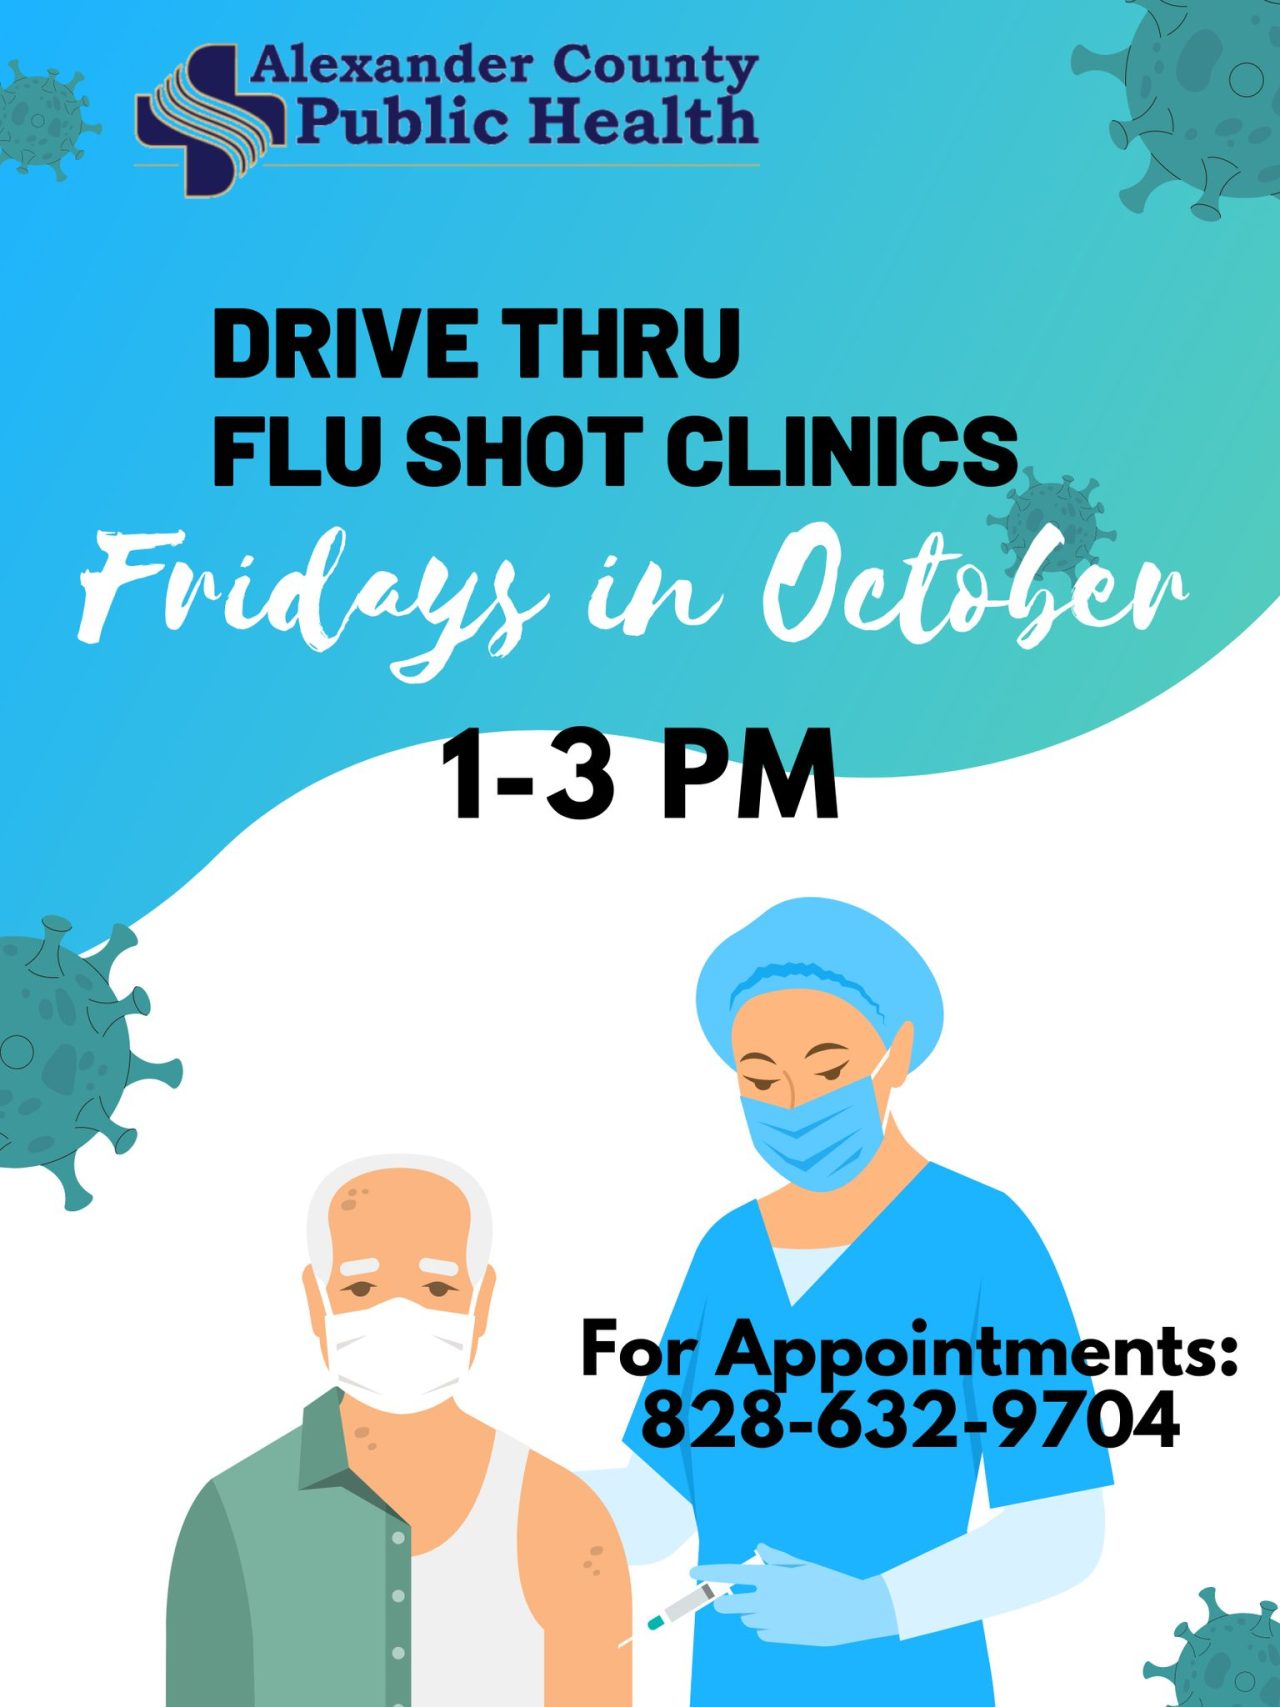 drive-thru flu shot clinics